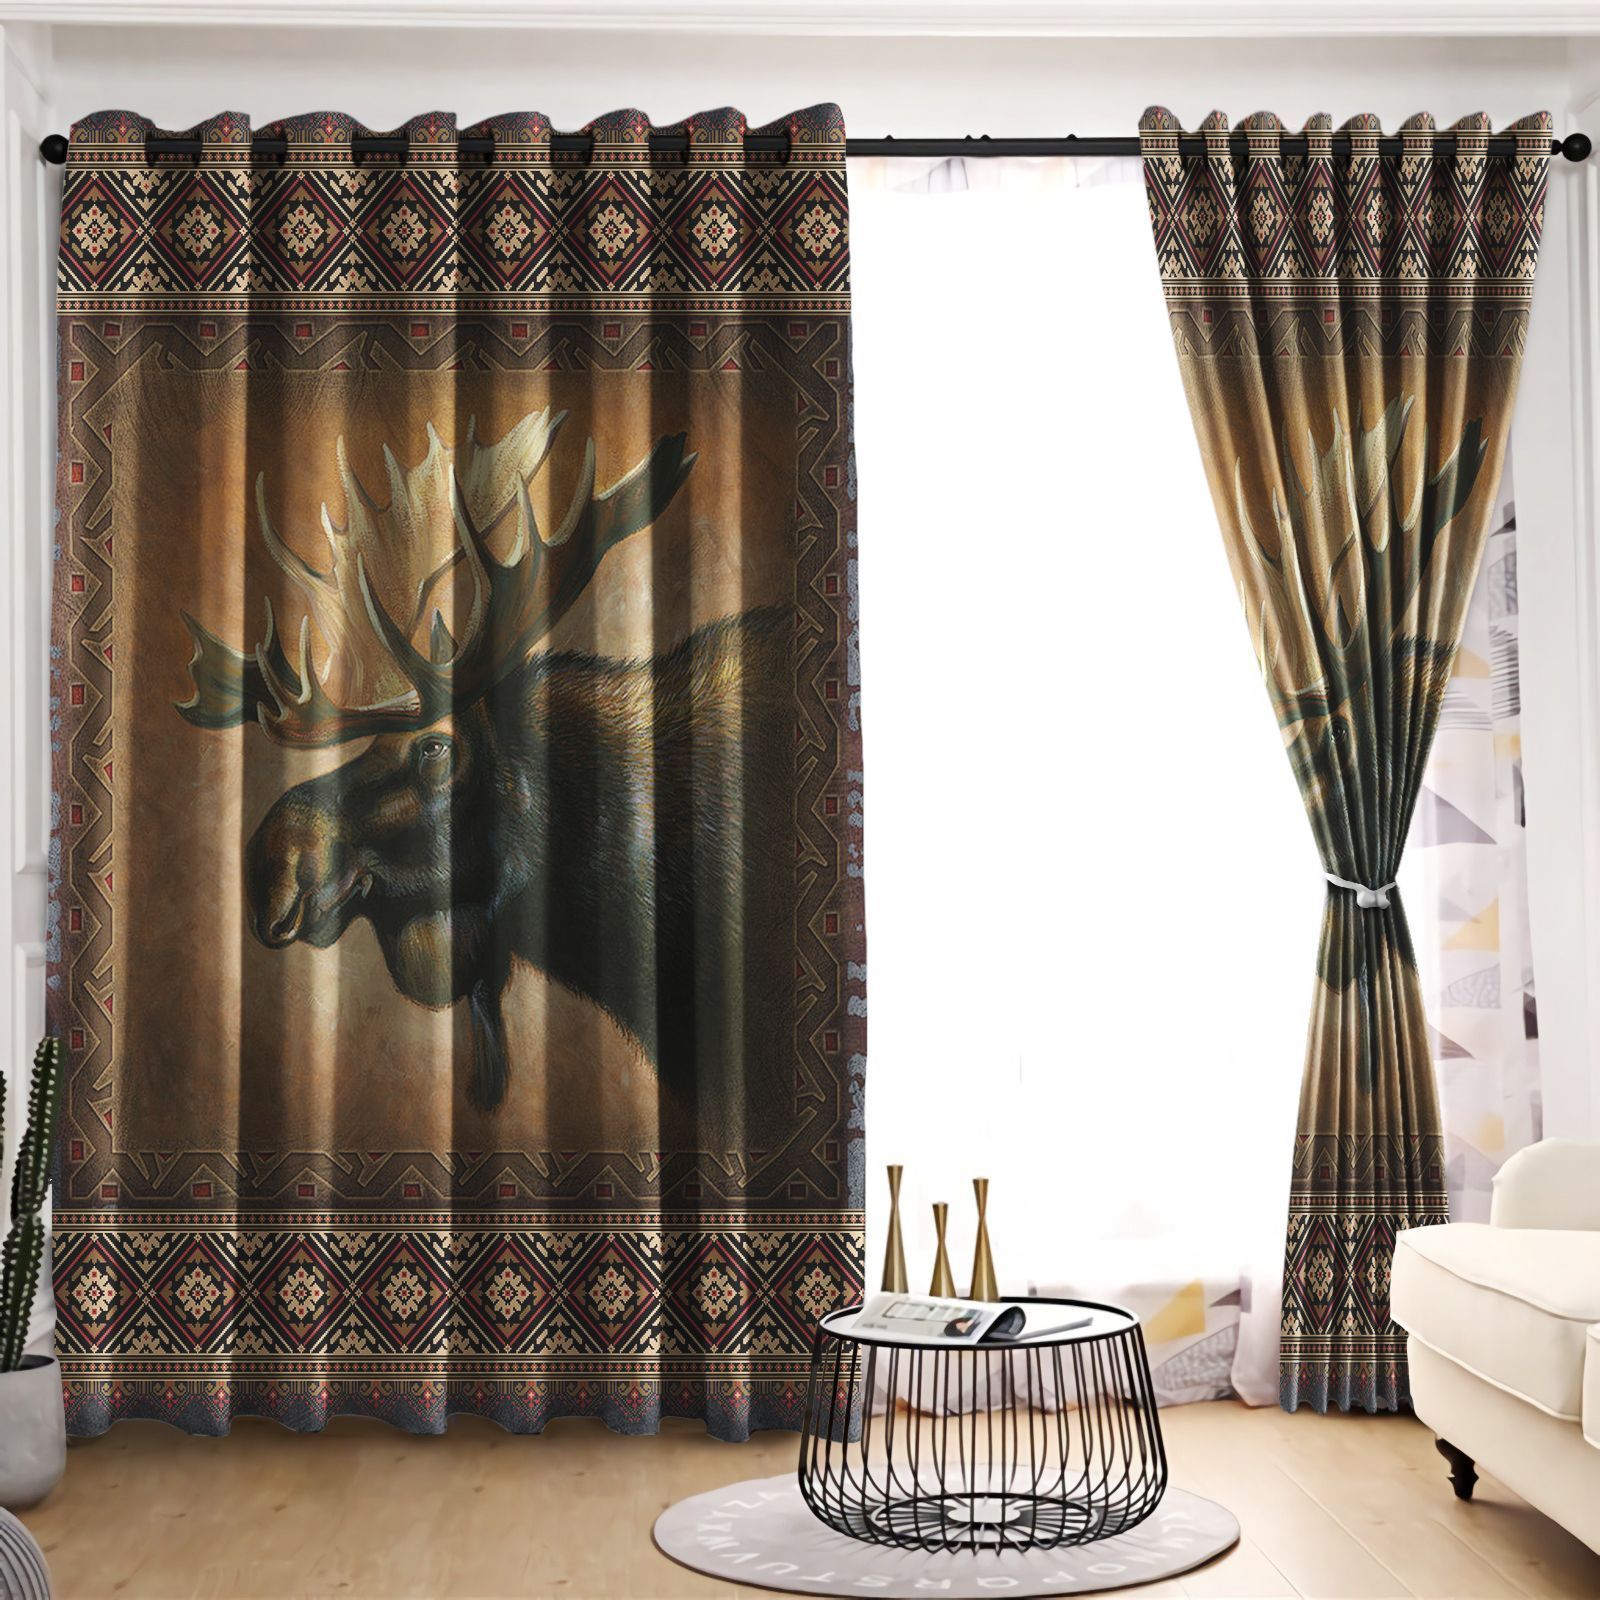 Moose Natural Life Printed Window Curtain Home Decor